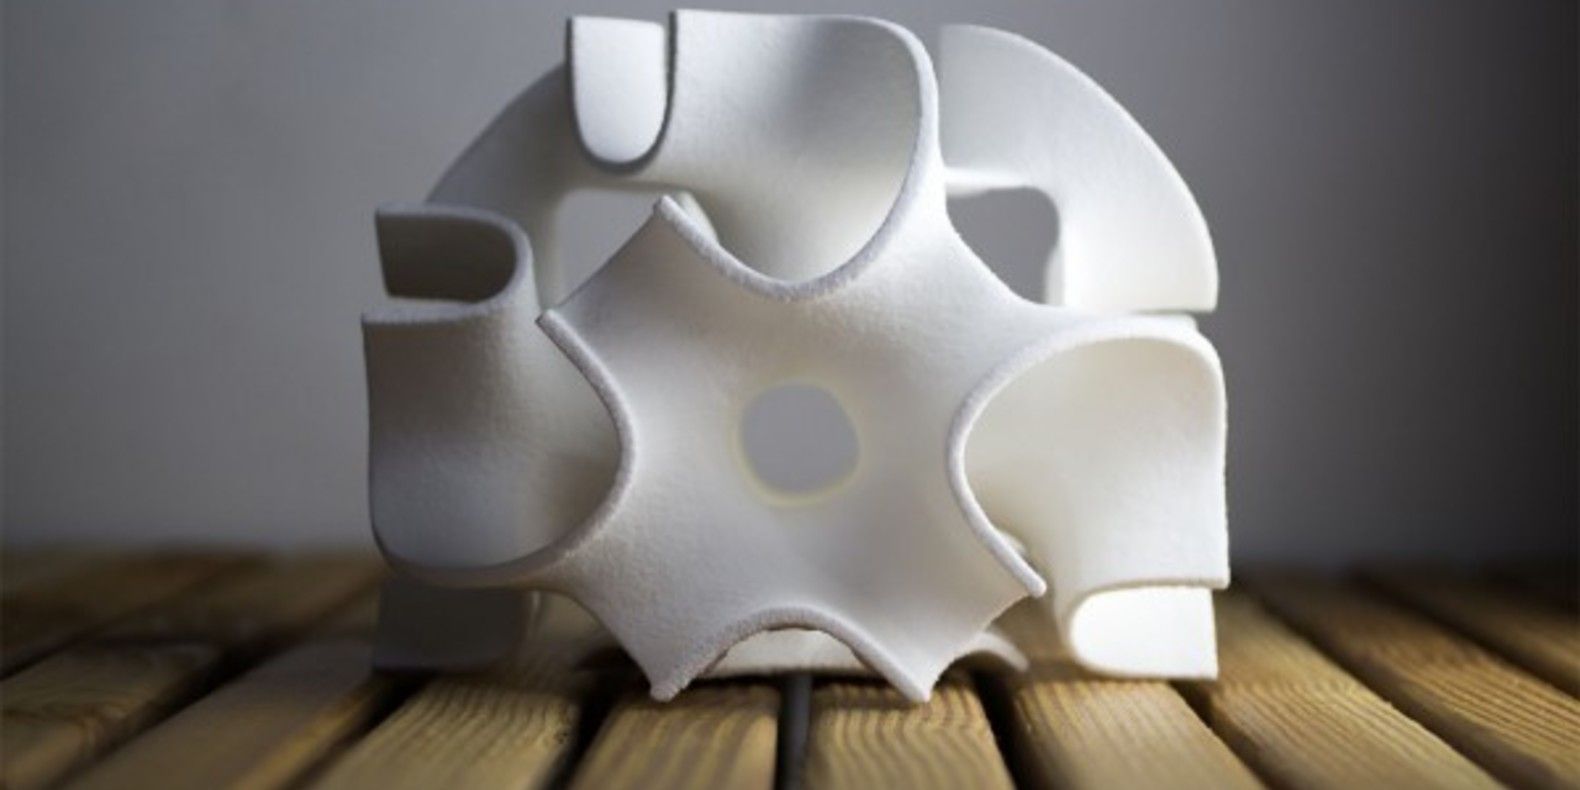 Sugar sculptures made in 3D printing